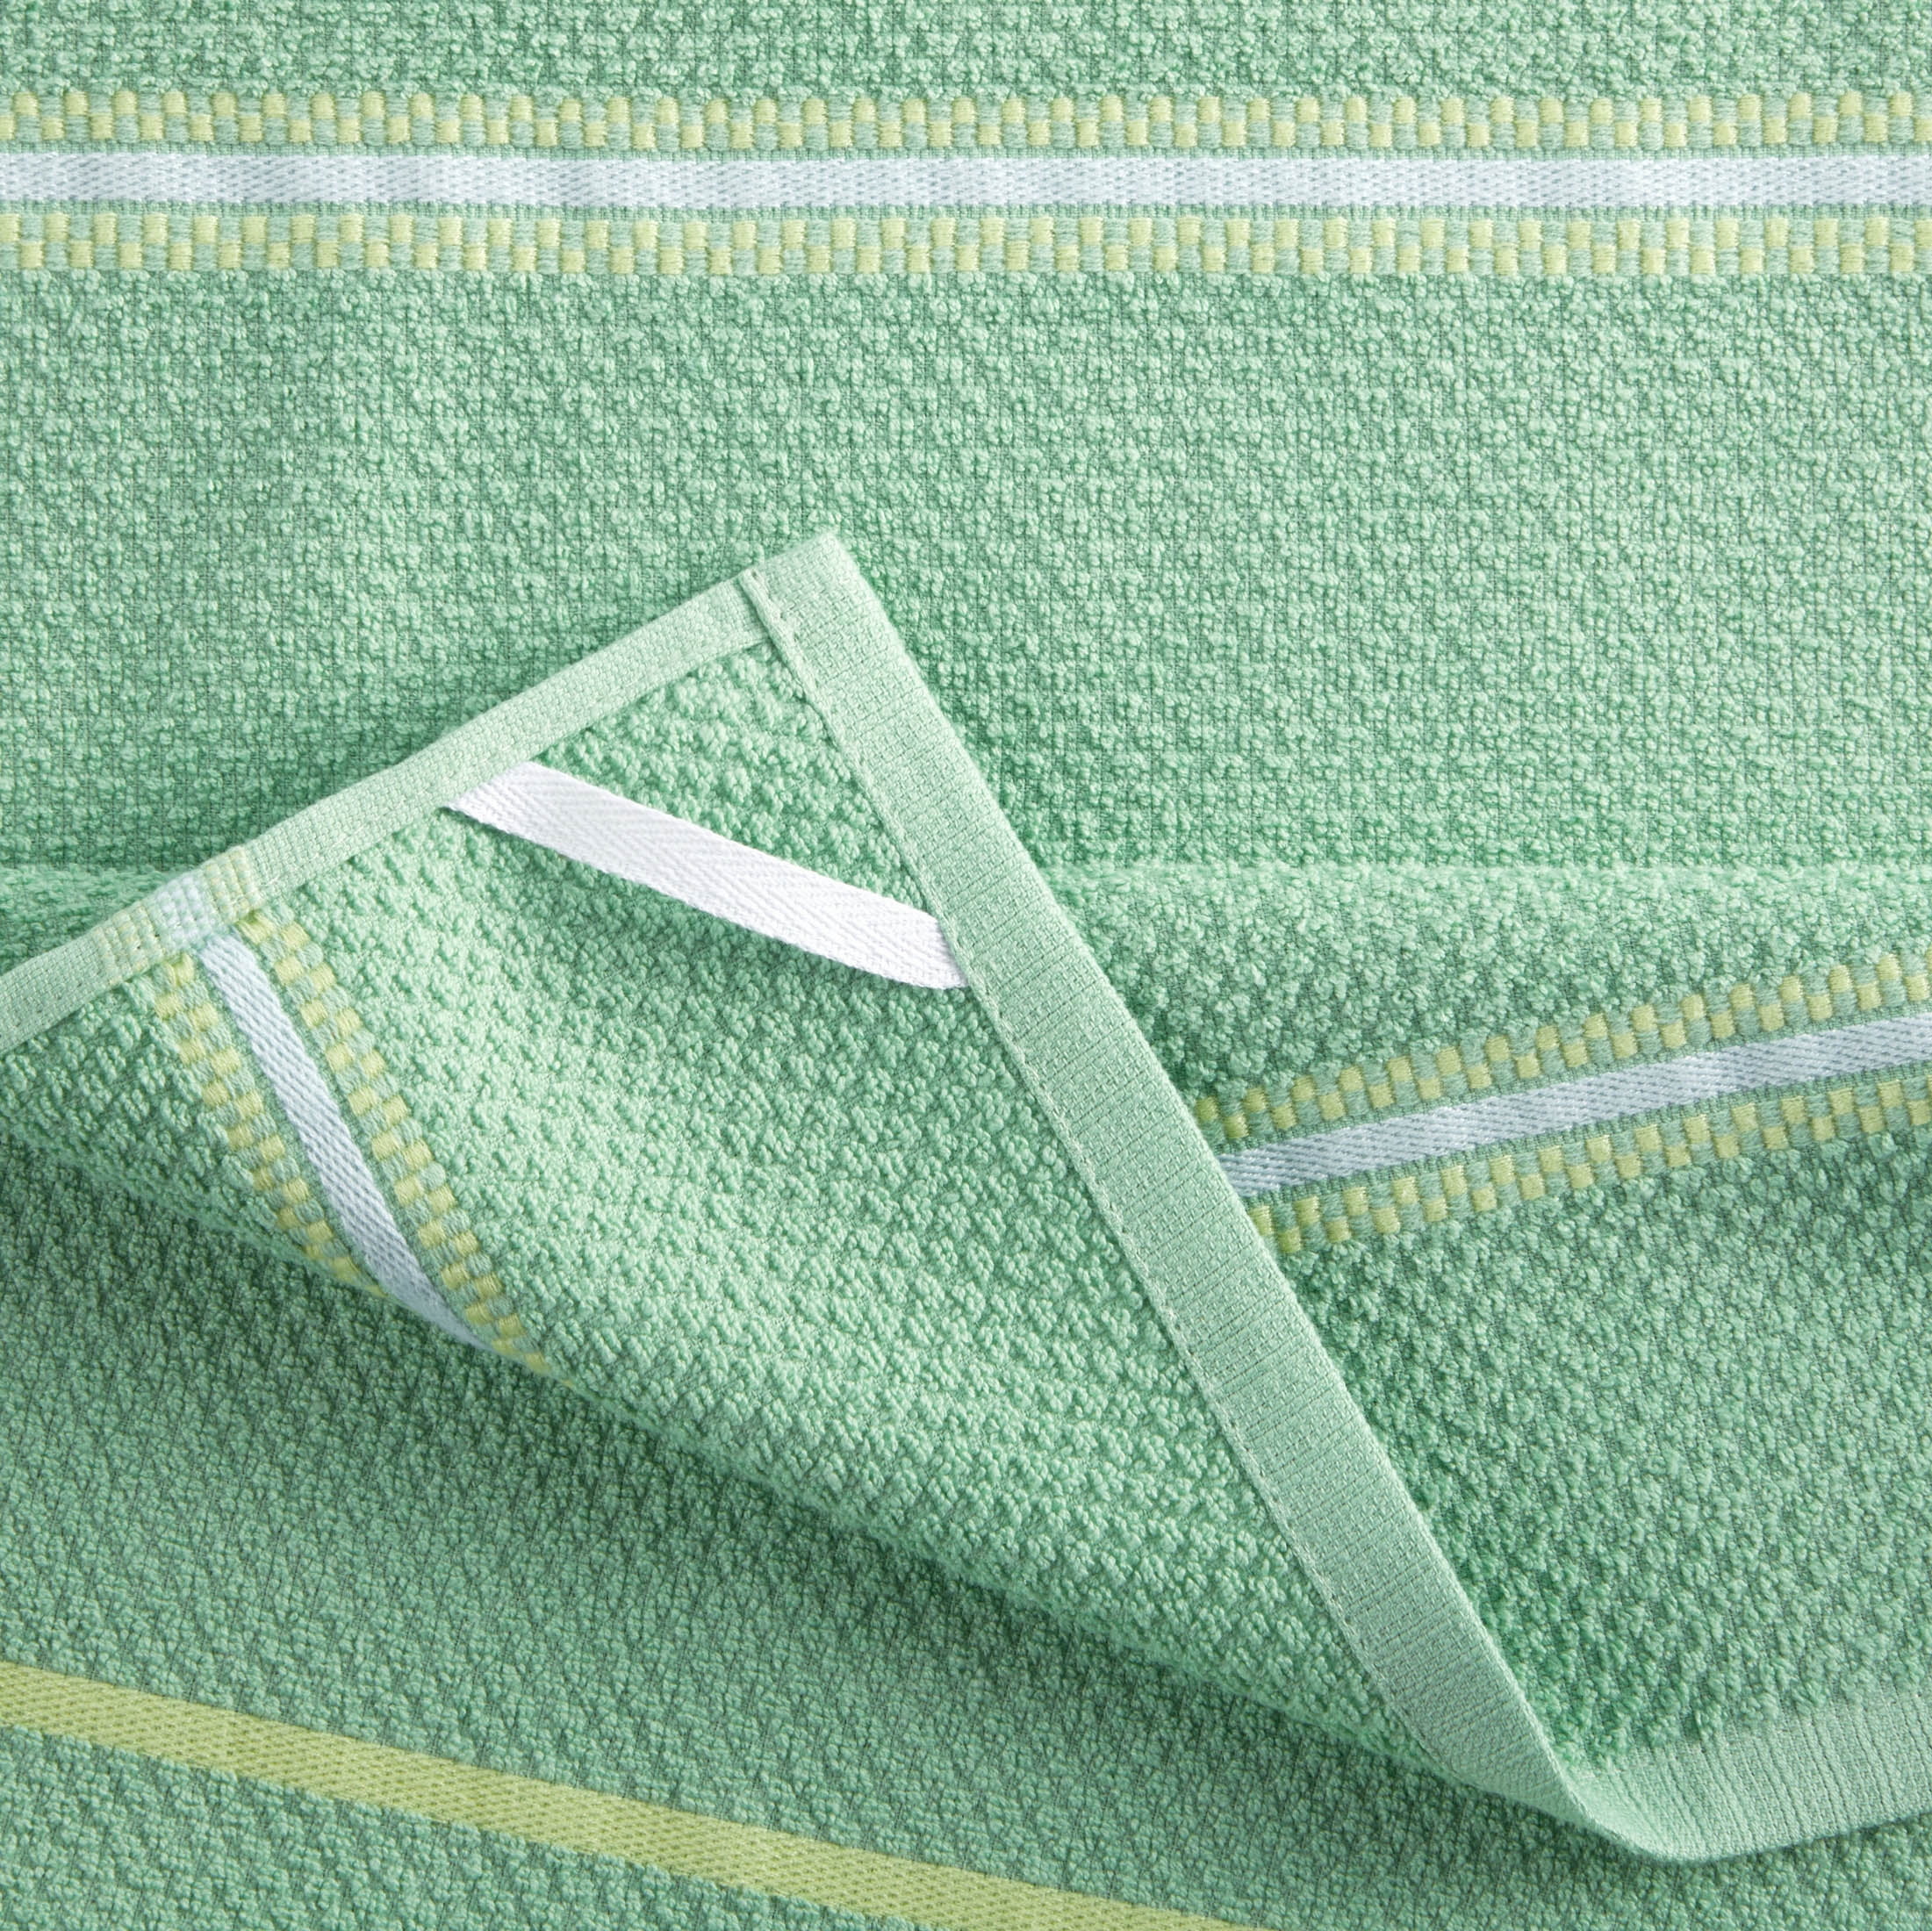 MARTHA STEWART KITCHEN TOWELS (3) DAISIES STRIPES GREEN YELLOW 100% COTTON  NWT